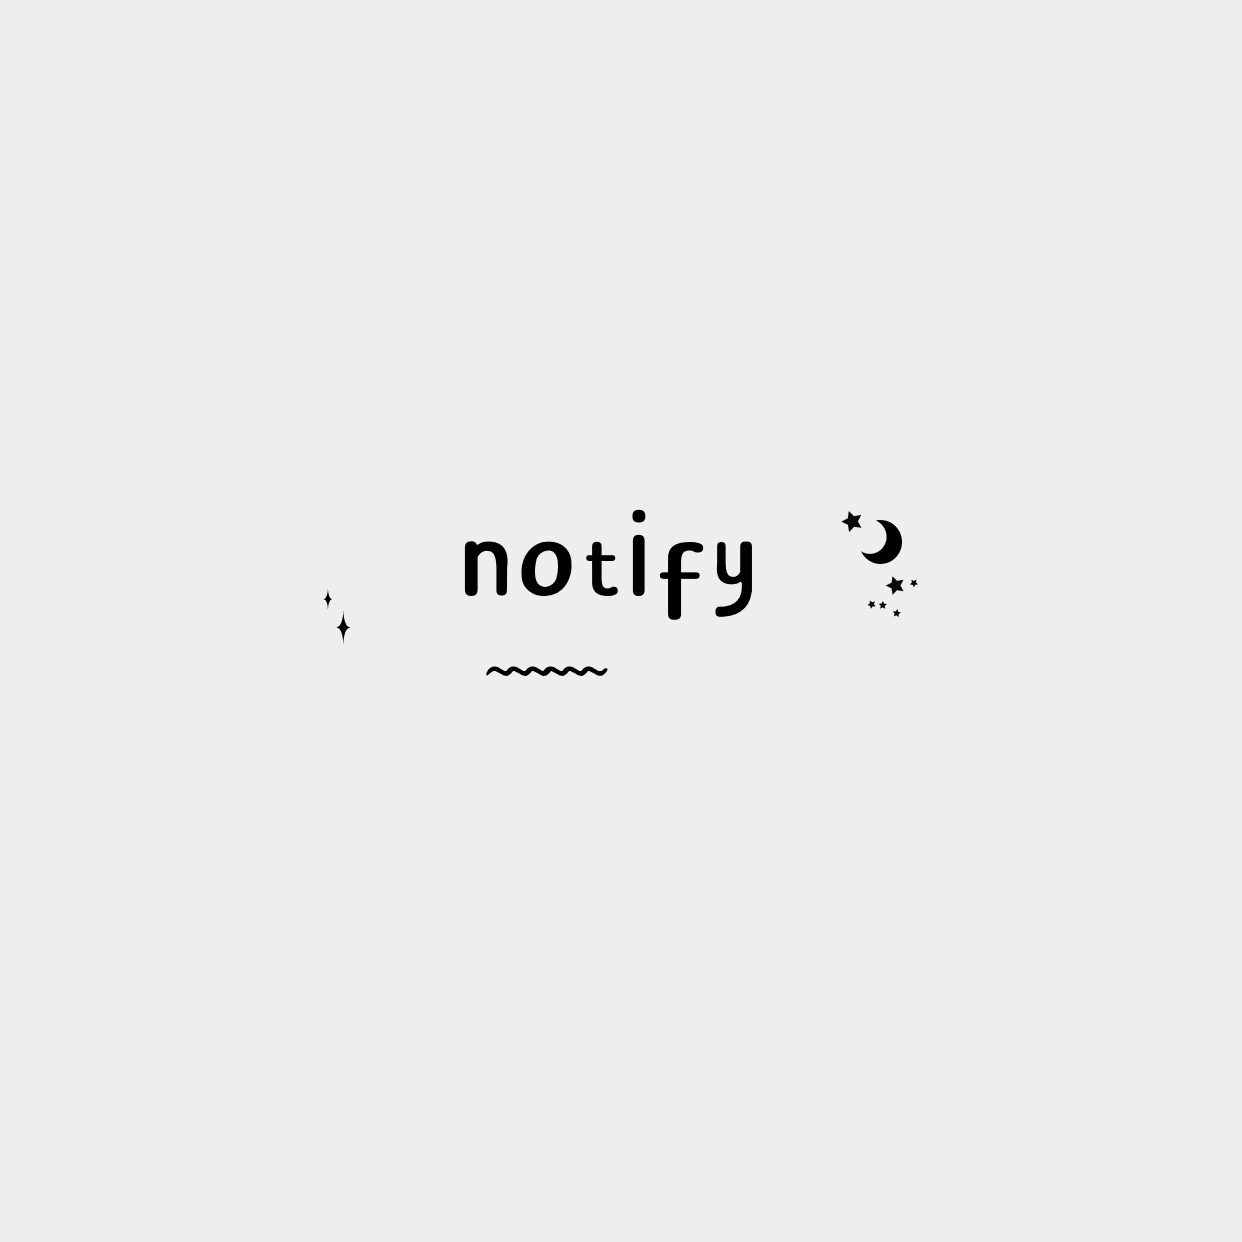 notify